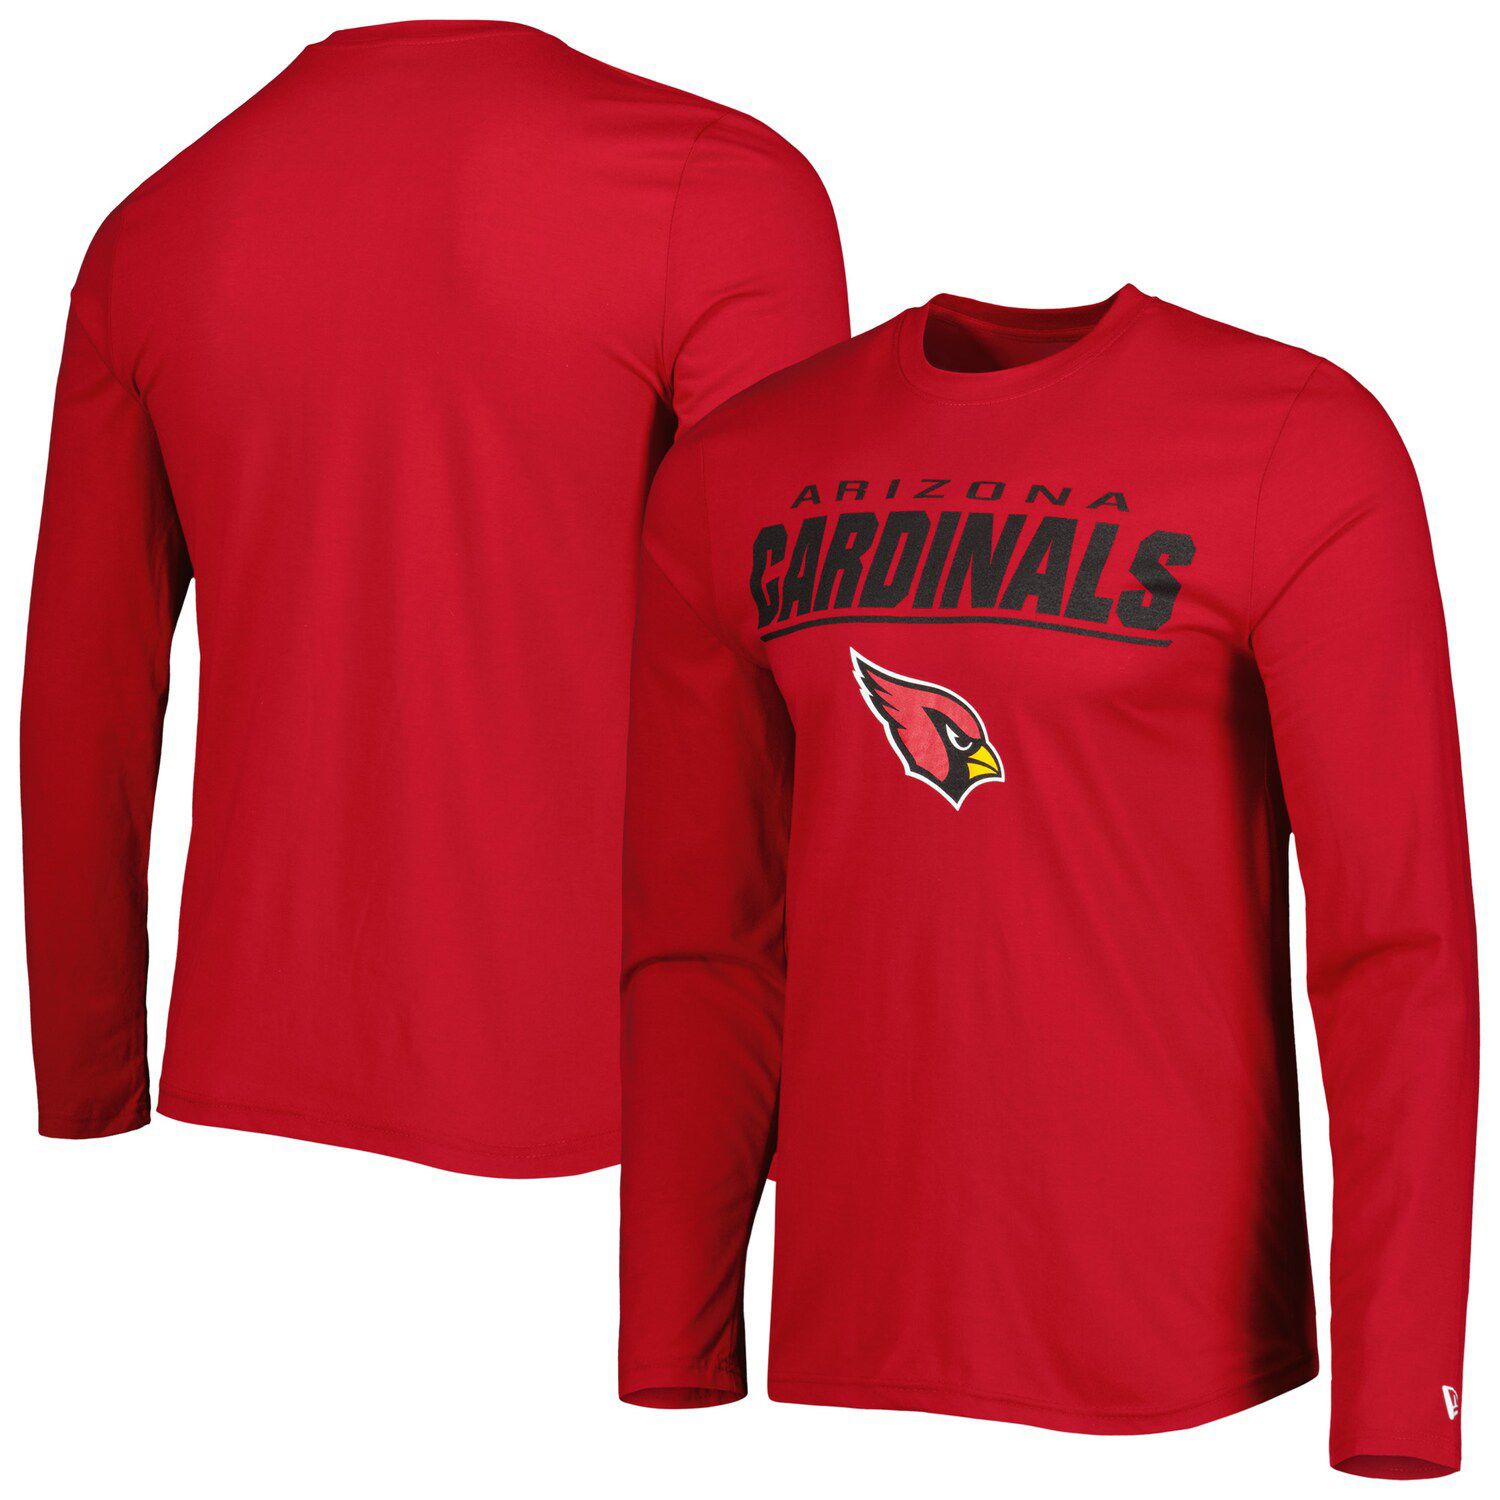 Nike Women's Dri-Fit Sideline Velocity (NFL Arizona Cardinals) T-Shirt in Red, Size: XS | 00M66ED9C-0BN